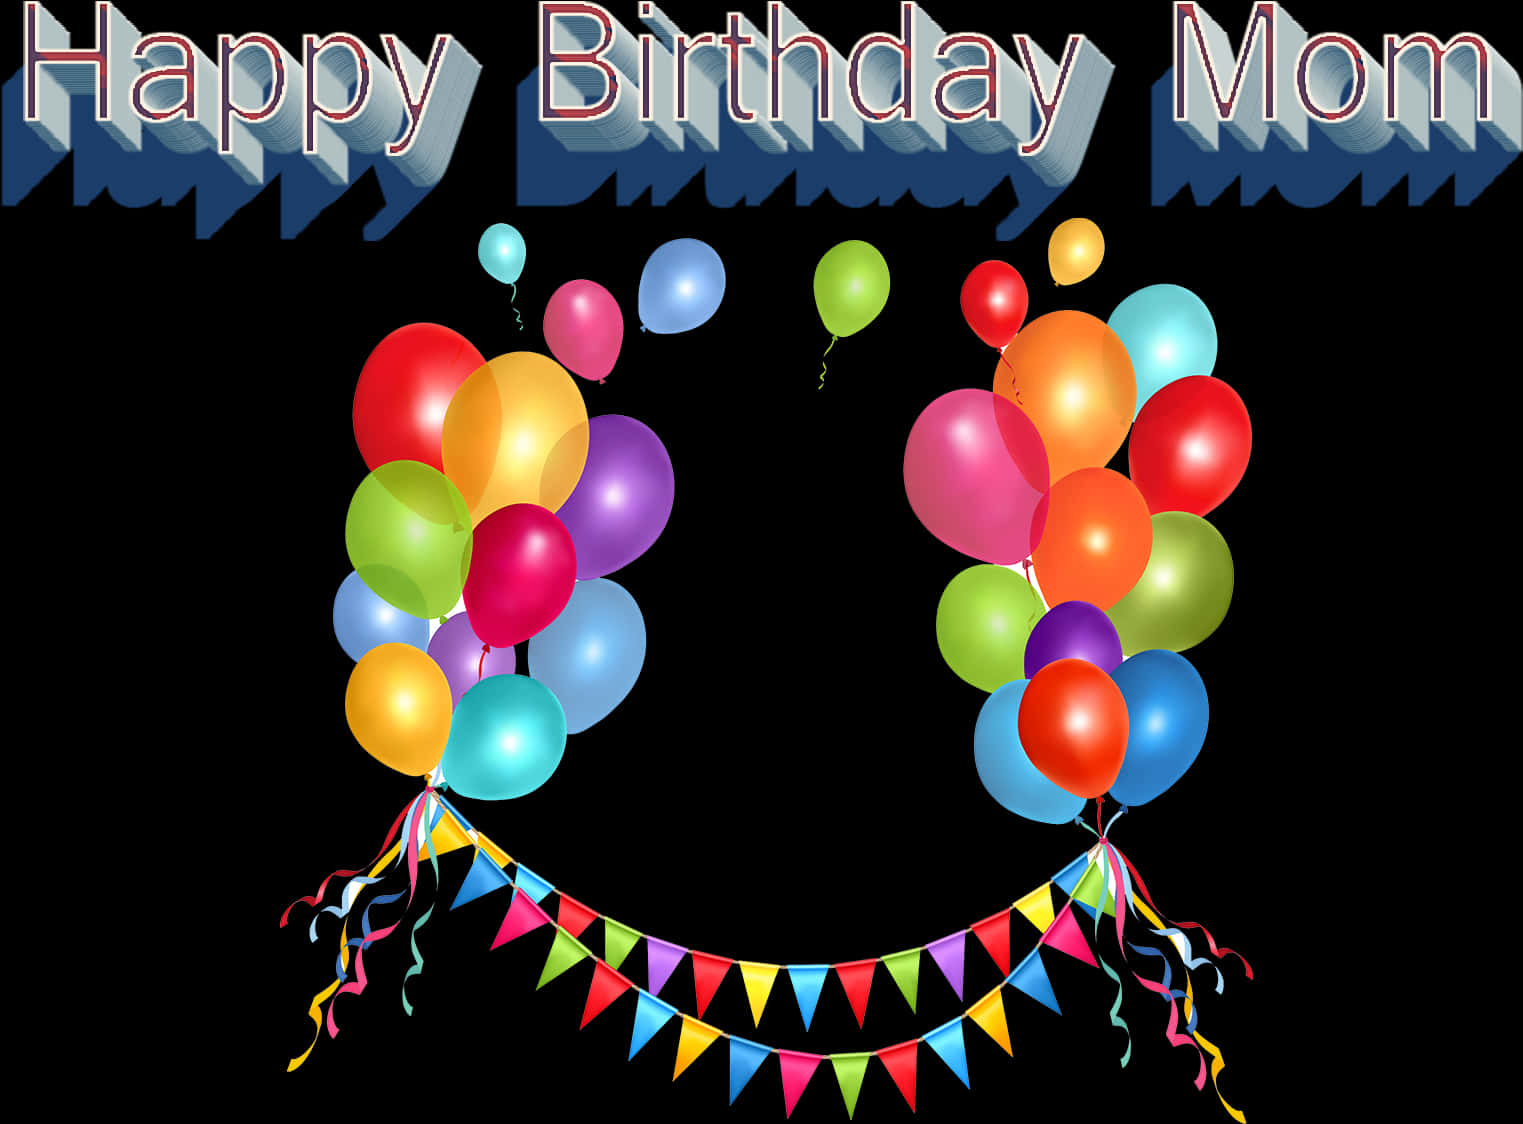 Happy Birthday Mom Balloon Celebration PNG image